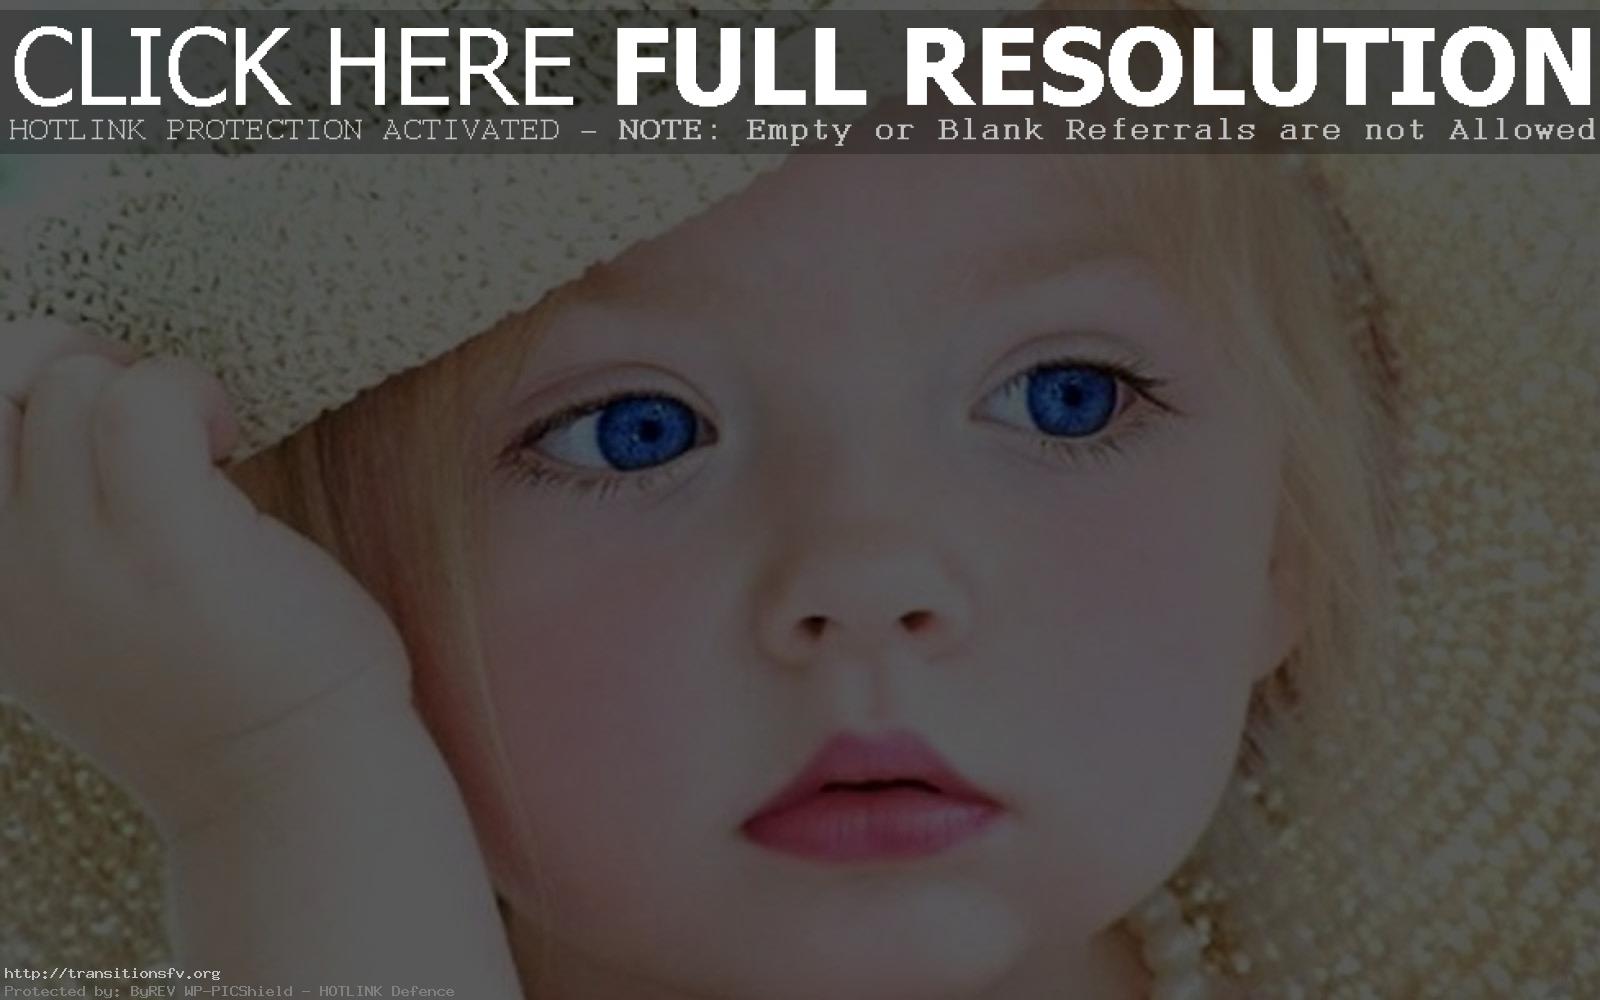 Cute Baby Hd Wallpapers 1080p - Warren Street Tube Station , HD Wallpaper & Backgrounds